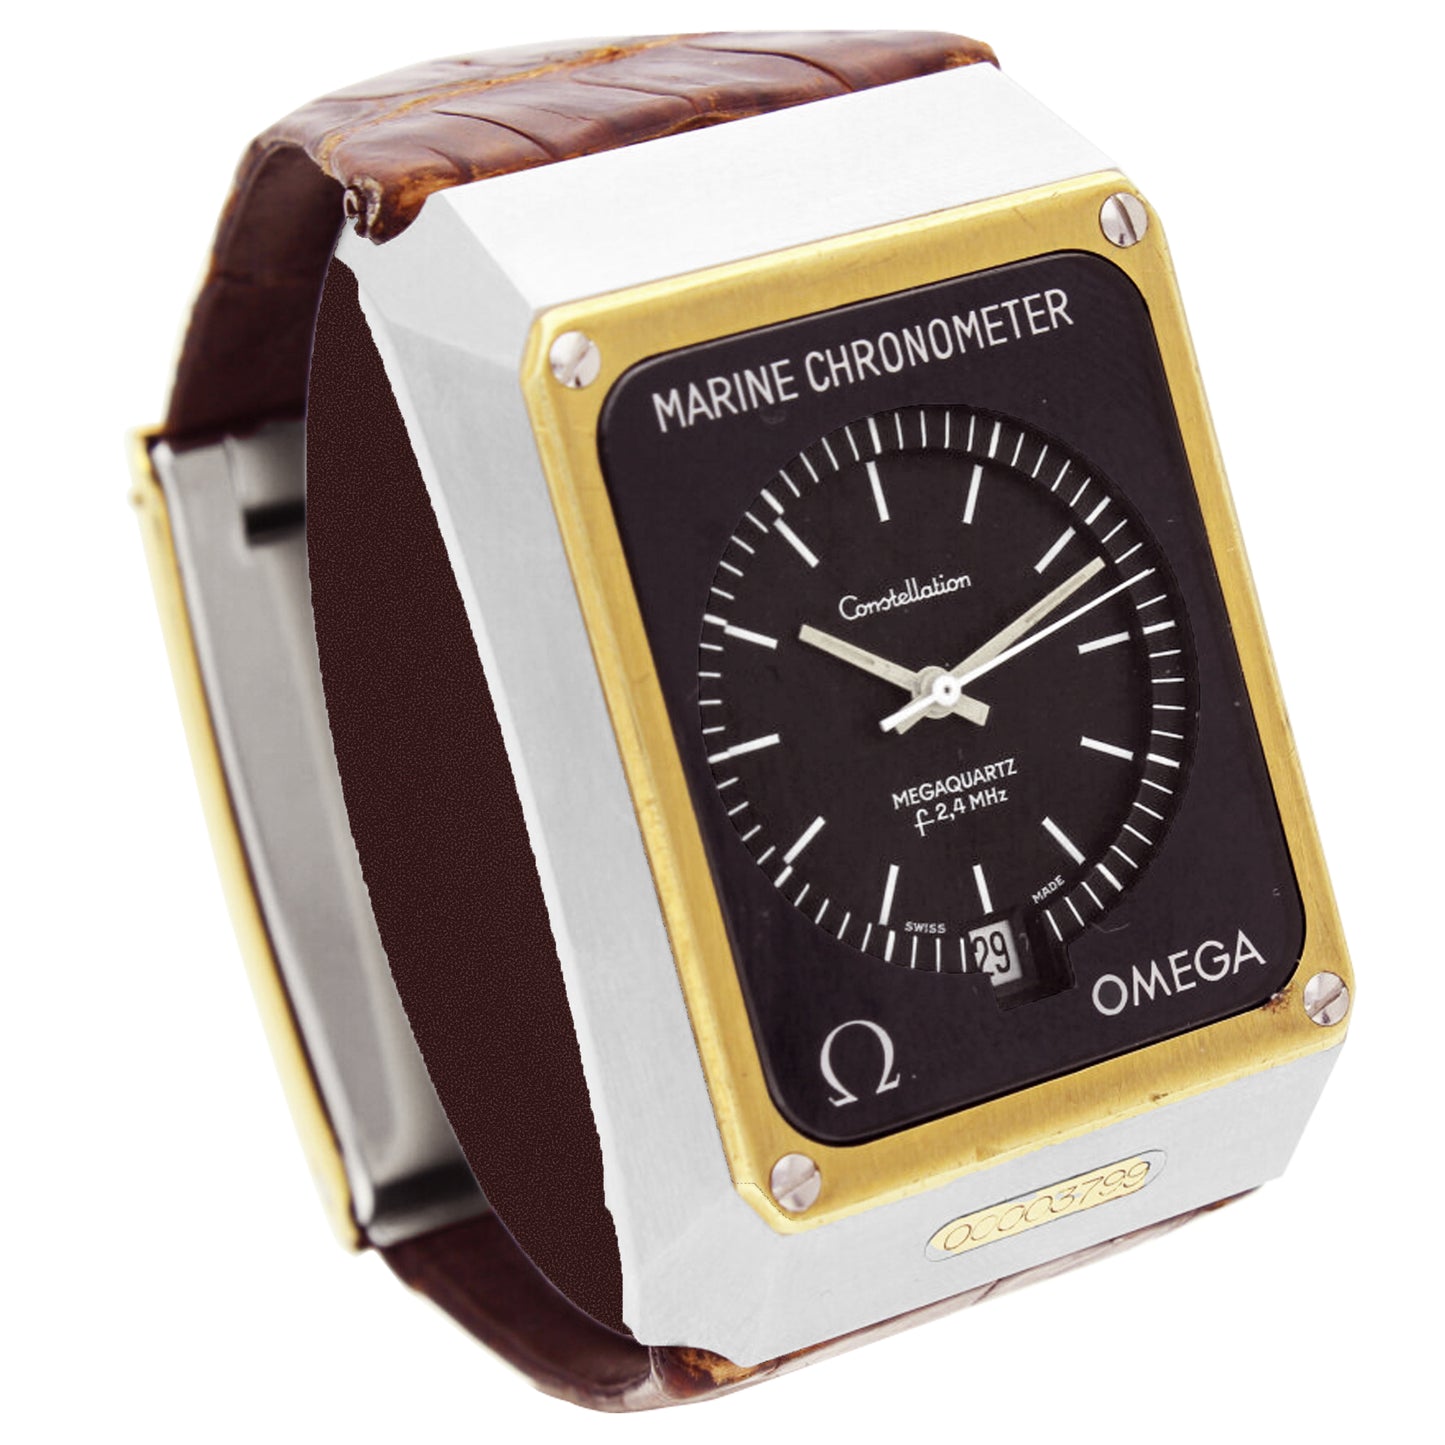 Stainless steel Constellation (prototype) marine chronometer wristwatch. Made 1970